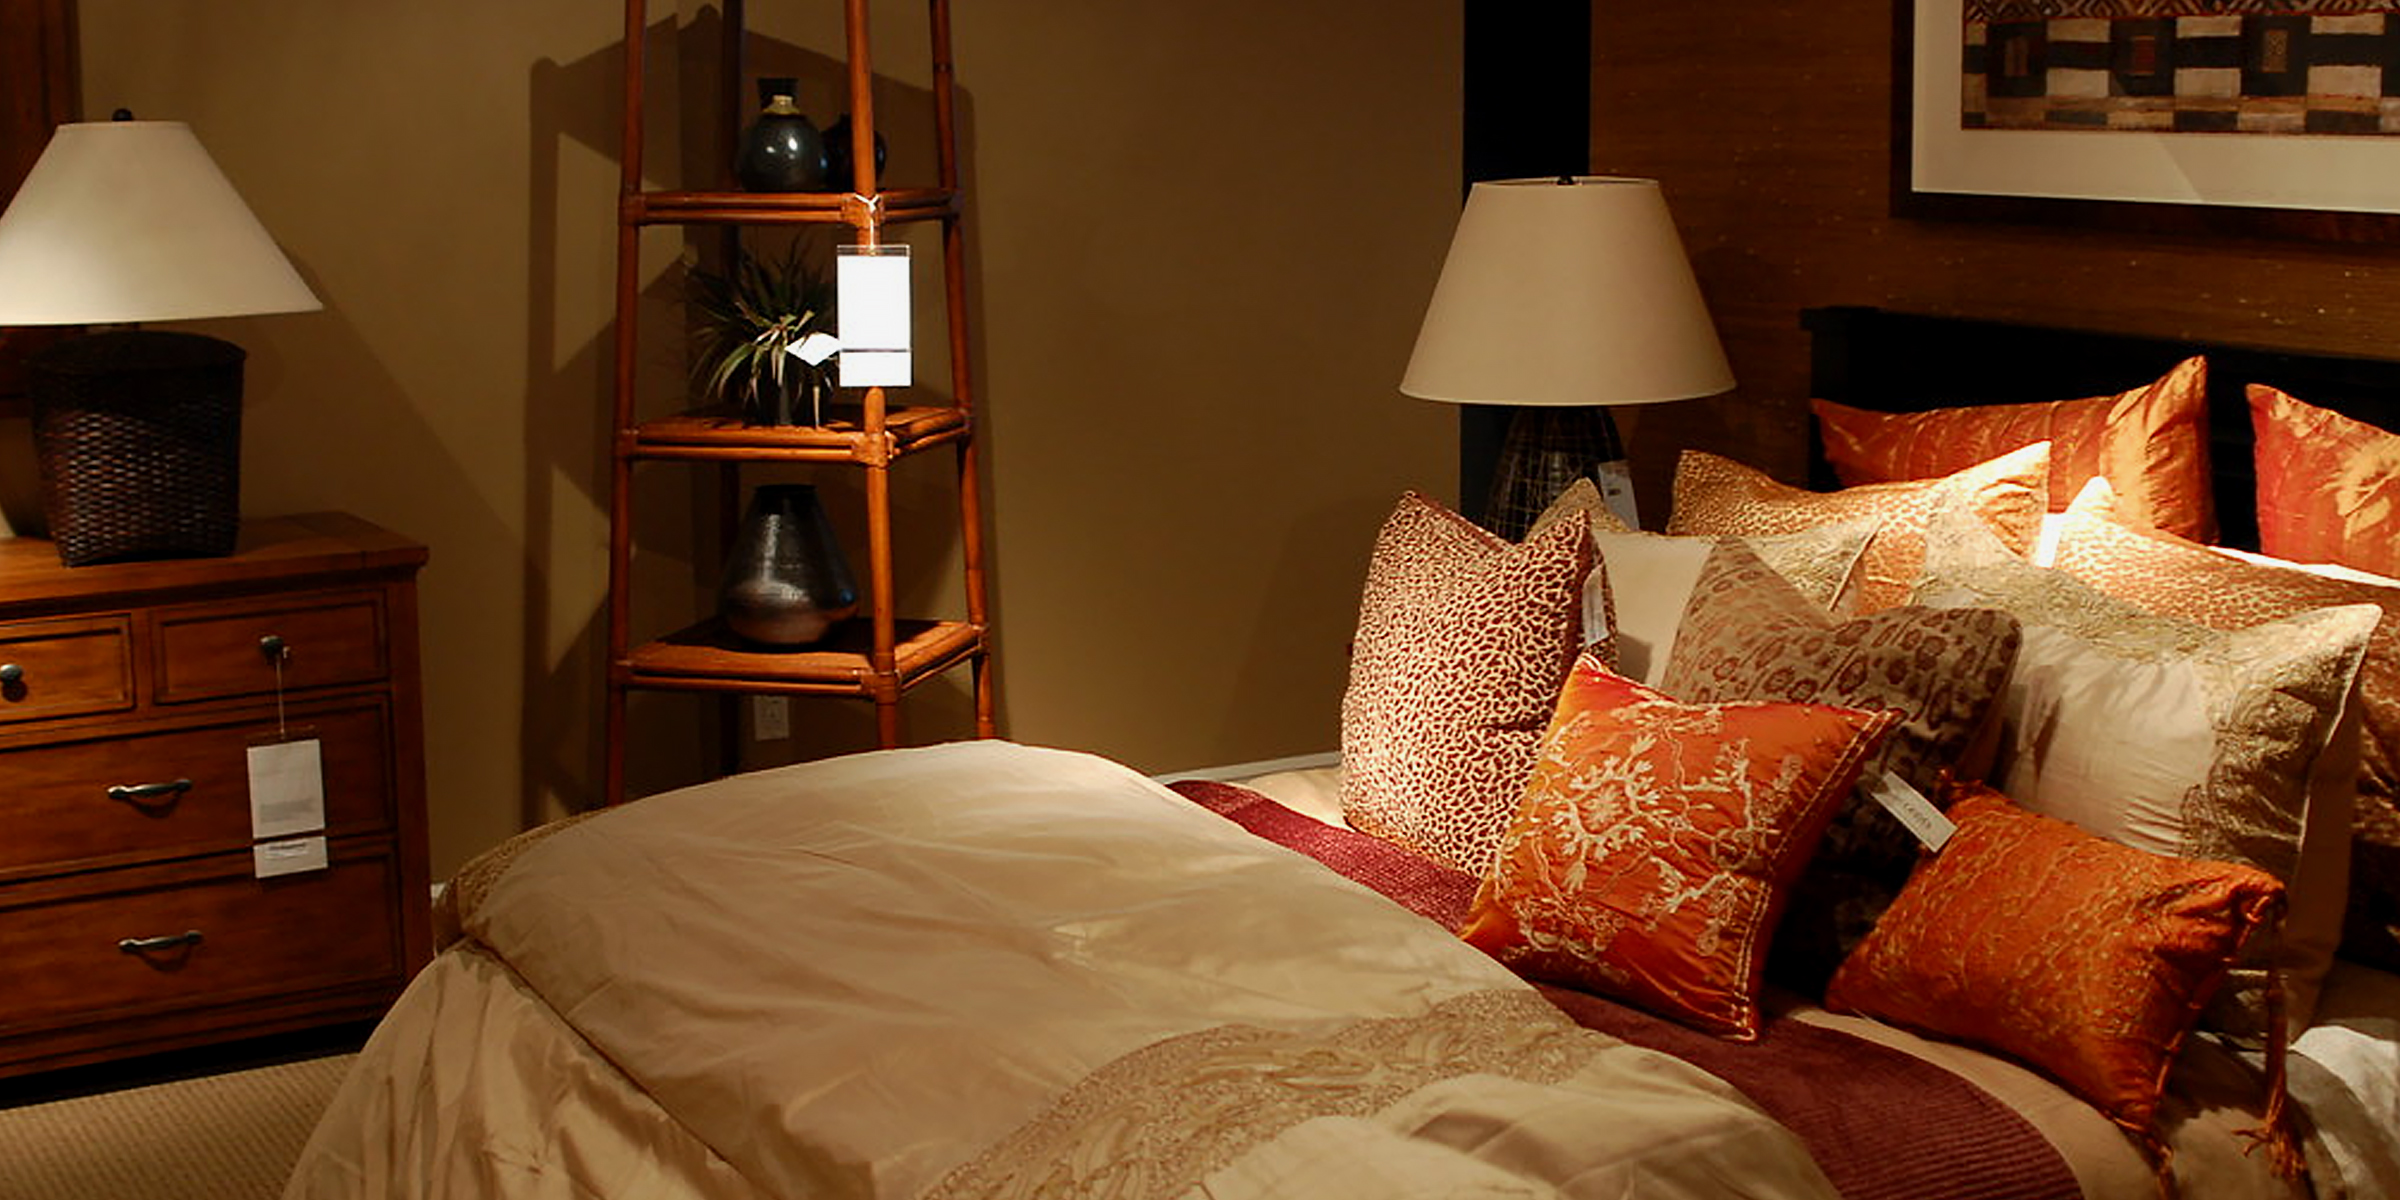 A beautiful bedroom | Source: Flickr.com/gfhdickinson/CC BY-SA 2.0